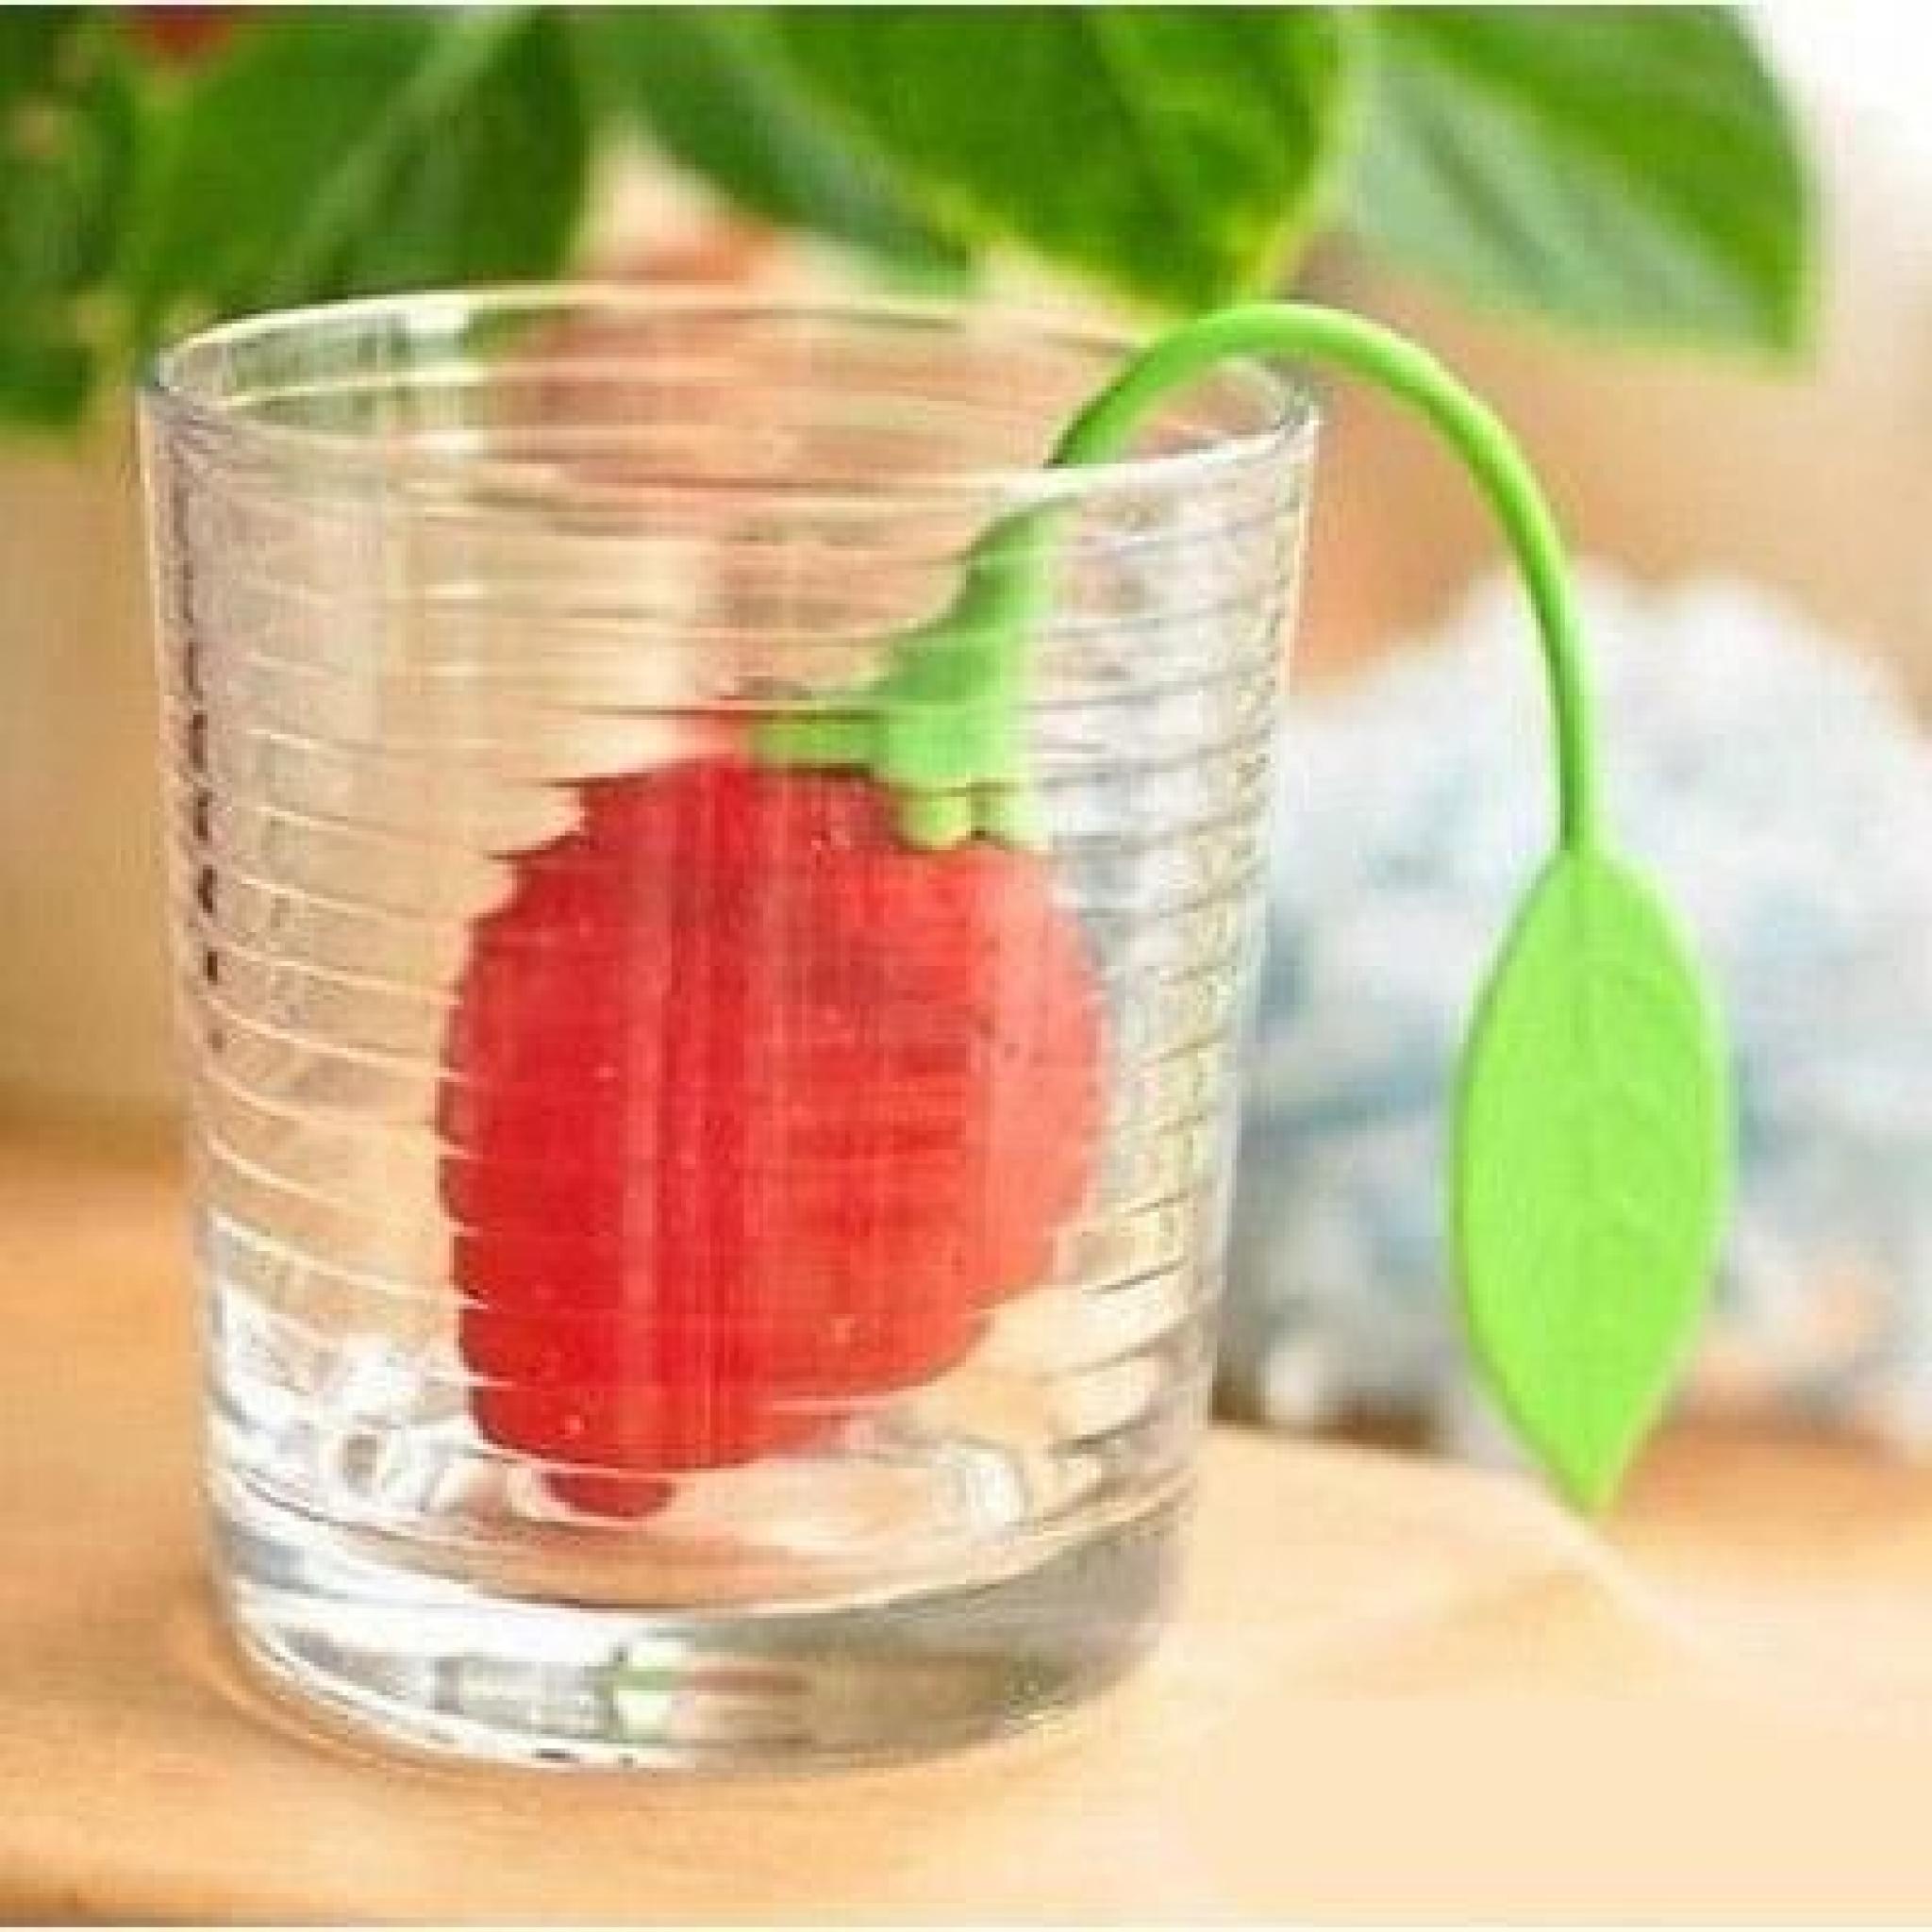 Style mignon Strawberry Tea Leaf Silicone Passoire Herbal Spice Infuser Filtre ba2a pas cher